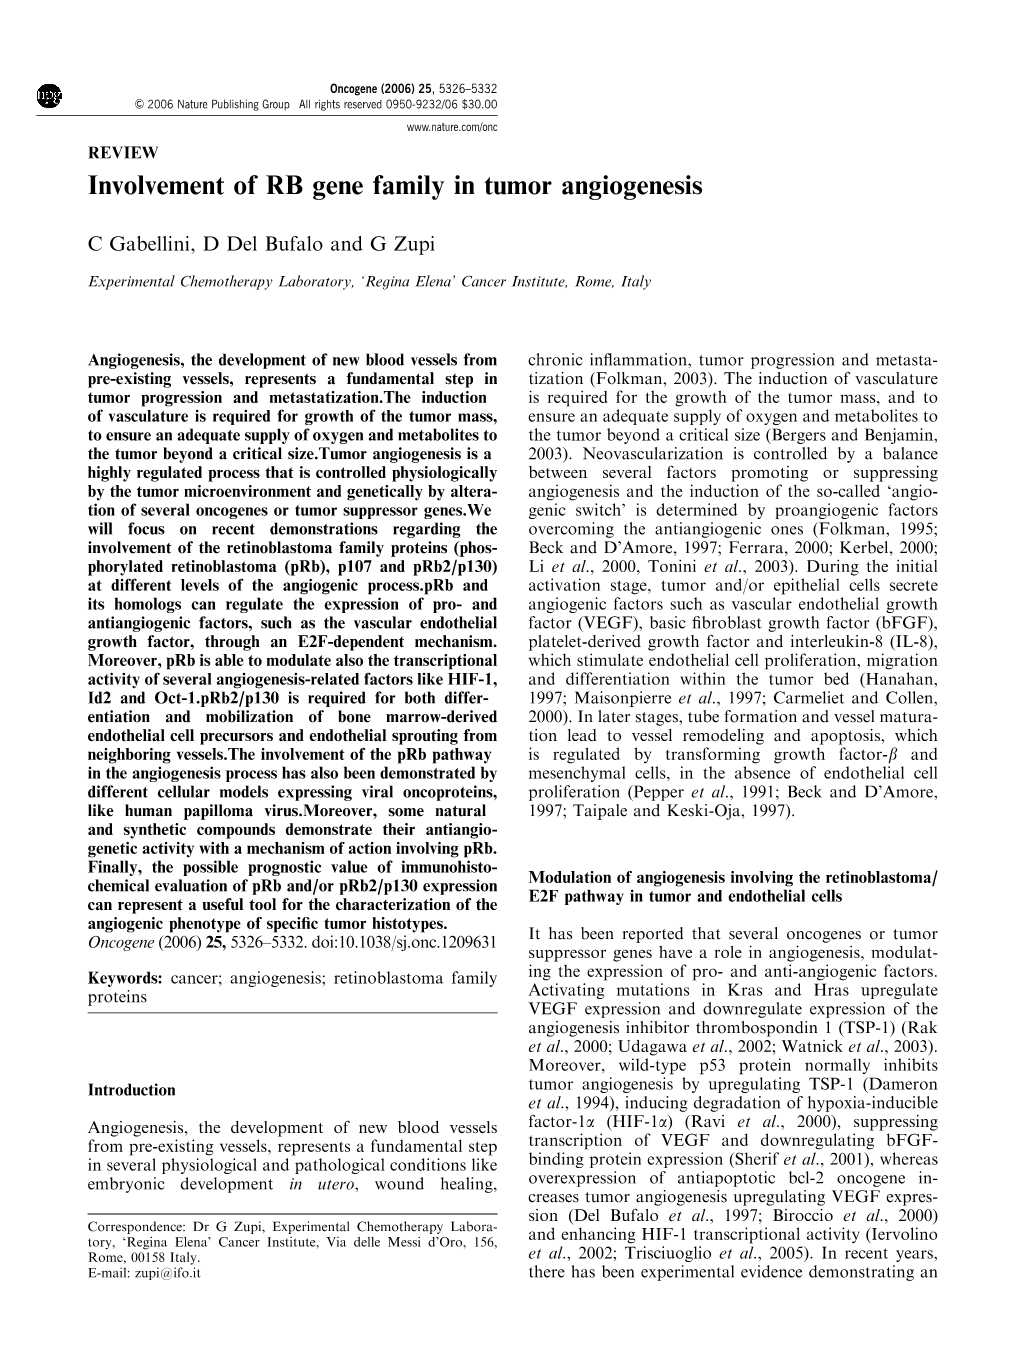 Involvement of RB Gene Family in Tumor Angiogenesis